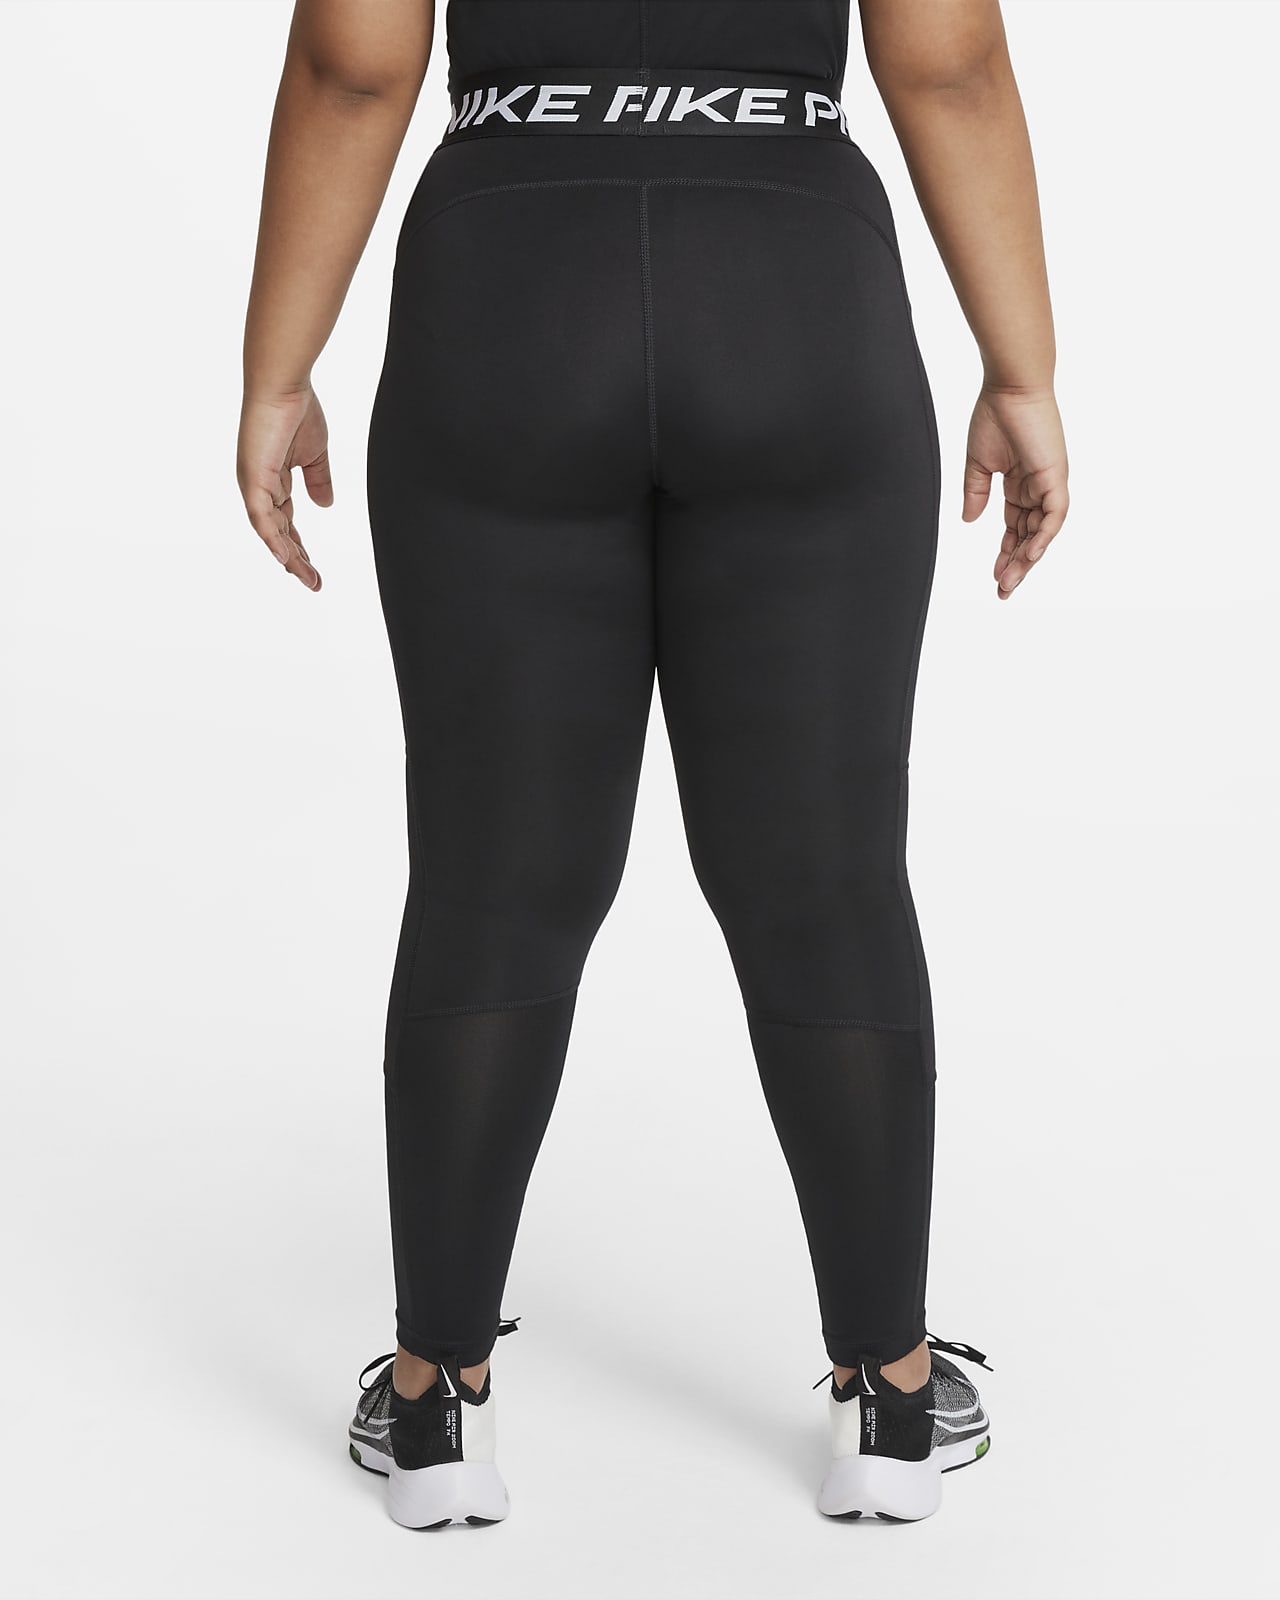 Nike Pro Dri-Fit Womens Leggings Size Medium Full Lenght Gray and